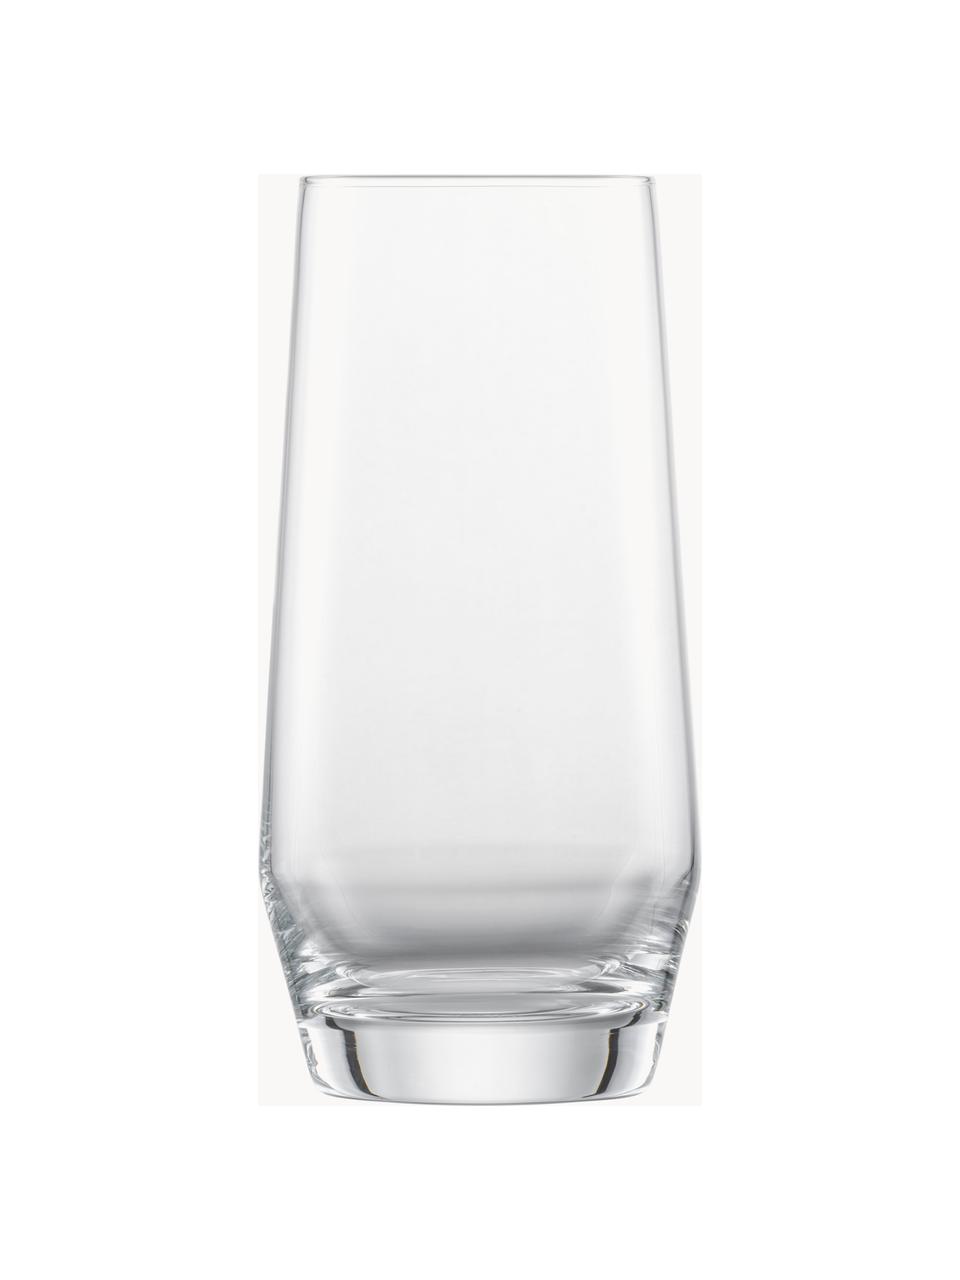 Szklanka Pure, 4 szt., Tritan, Transparentny, Ø 8 x W 17 cm, 540 ml